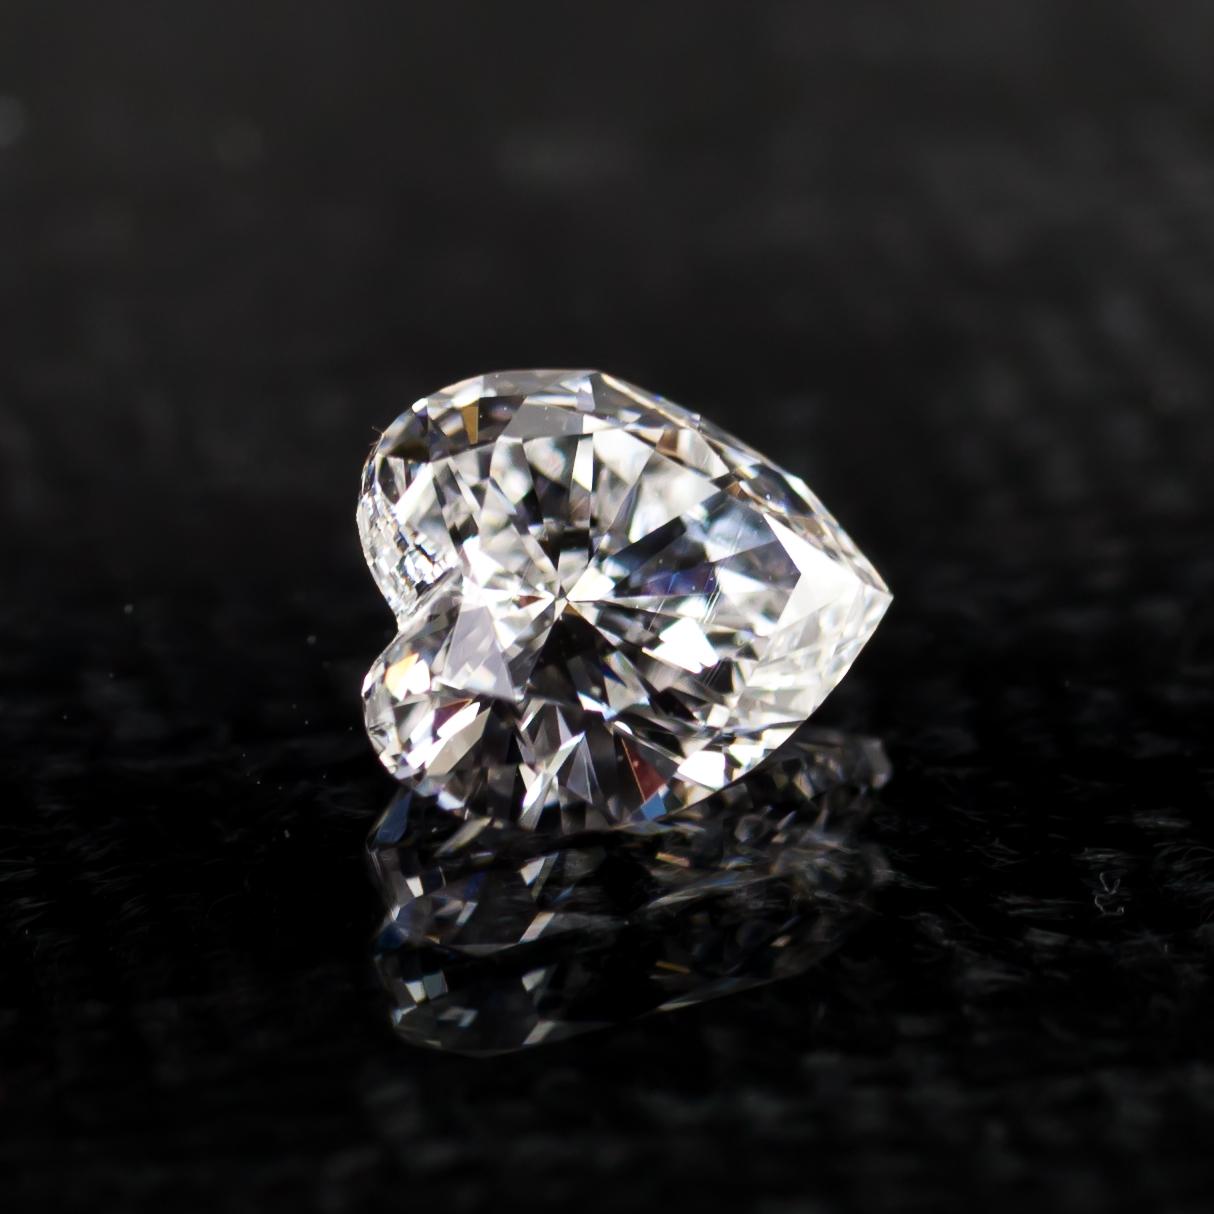 Diamond General Info
Diamond Cut: Heart Brilliant
Measurements: 6.86  x  6.32  -  3.52 mm
GIA Report Number: 2183448129

Diamond Grading Results
Carat Weight: 1.01
Color Grade: F
Clarity Grade: VVS2

Additional Grading Information 
Polish: Very